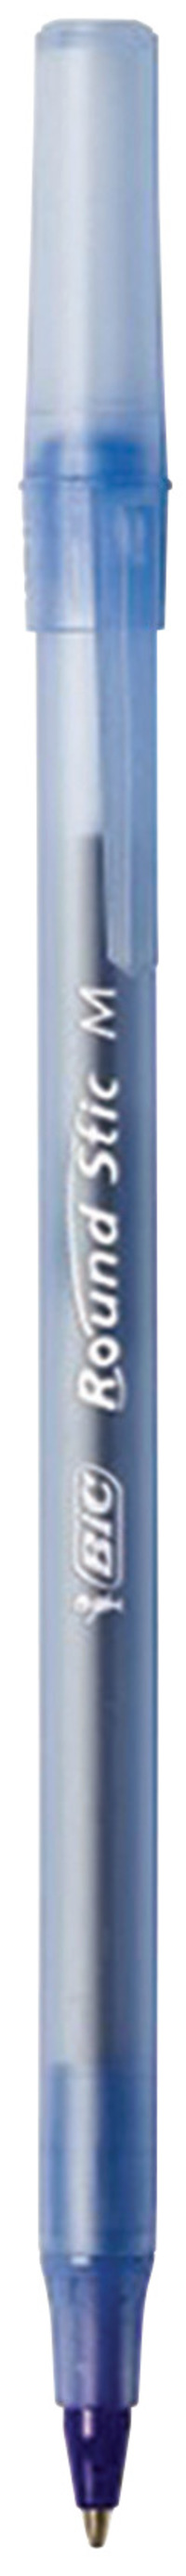 BIC Round Stic Ballpoint Pen, 1 mm Medium Tip, Blue Ink, Pack of 12, Item Number 027469